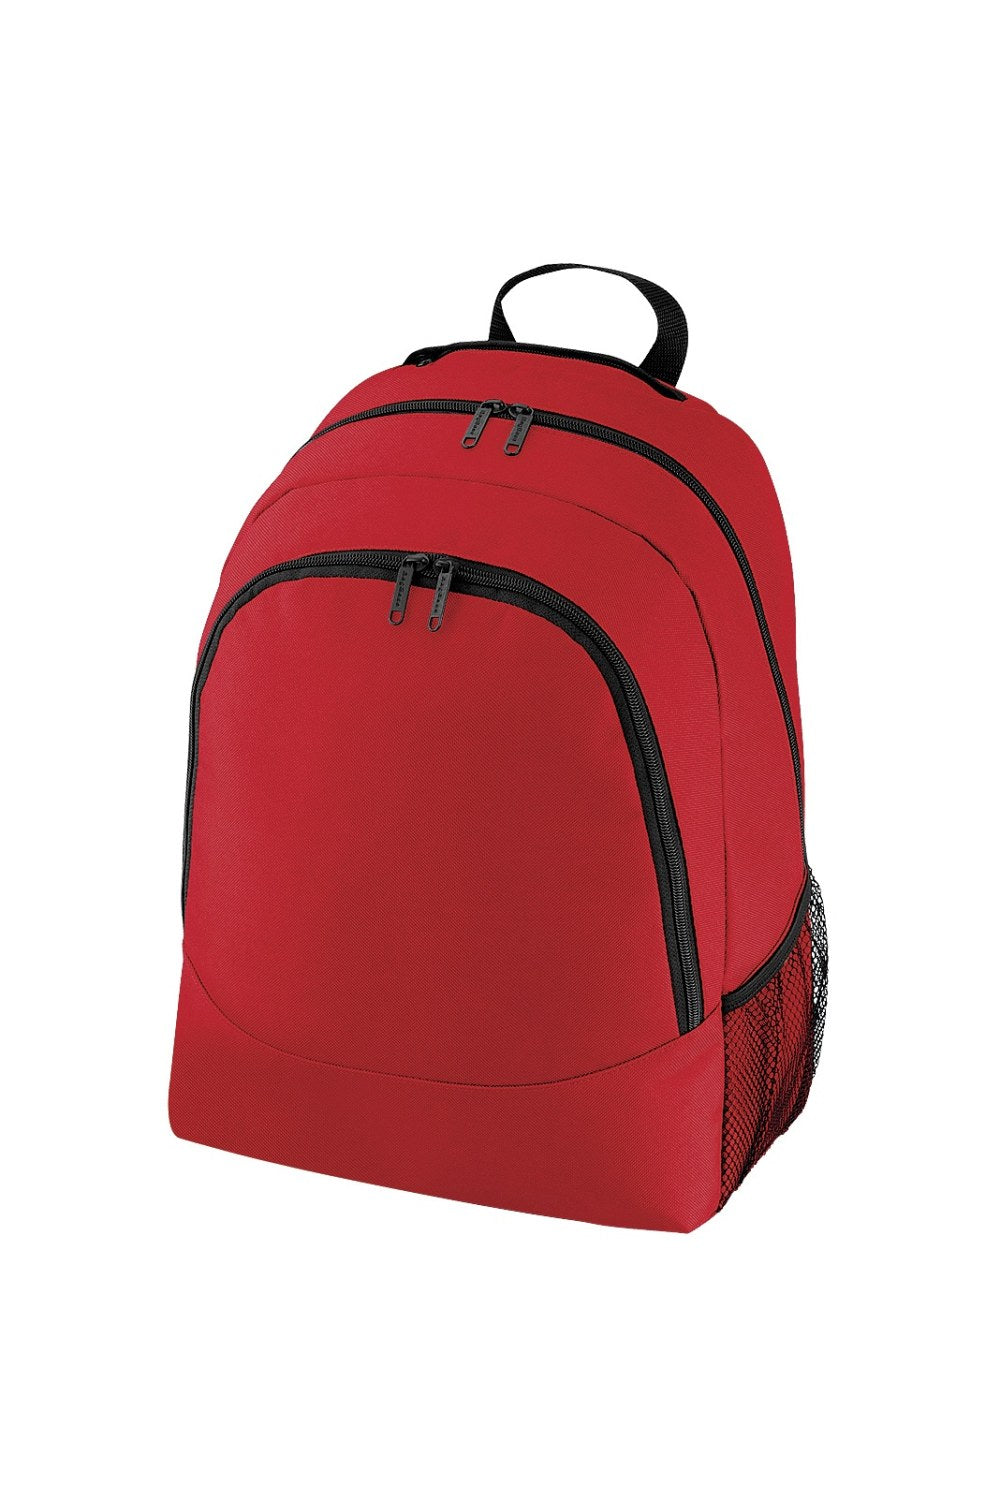 Plain Universal Backpack / Rucksack Bag 18 Liters - Classic Red